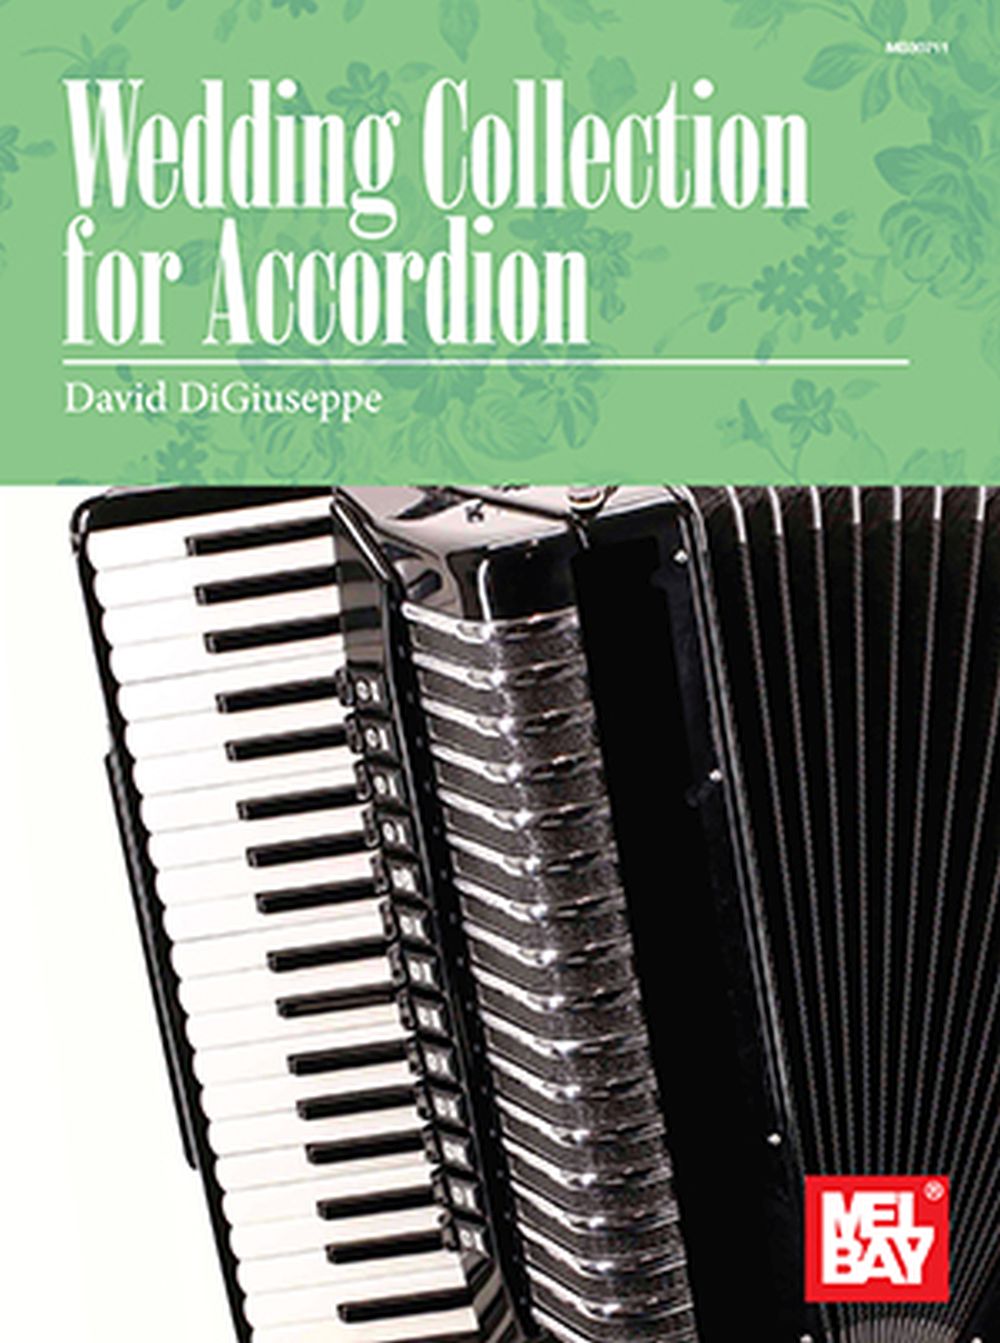 Wedding Collection For Accordion (DIGIUSEPPE DAVID)